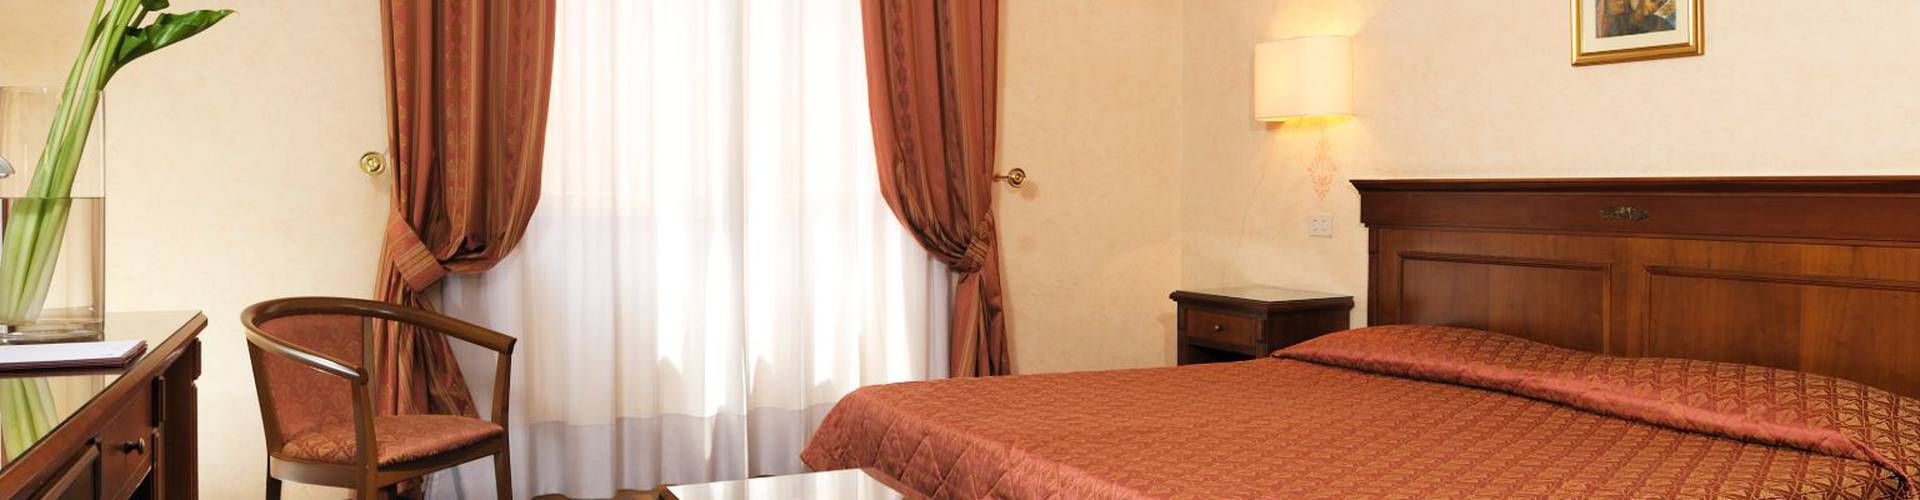 Leonardi Hotels - Roma - 